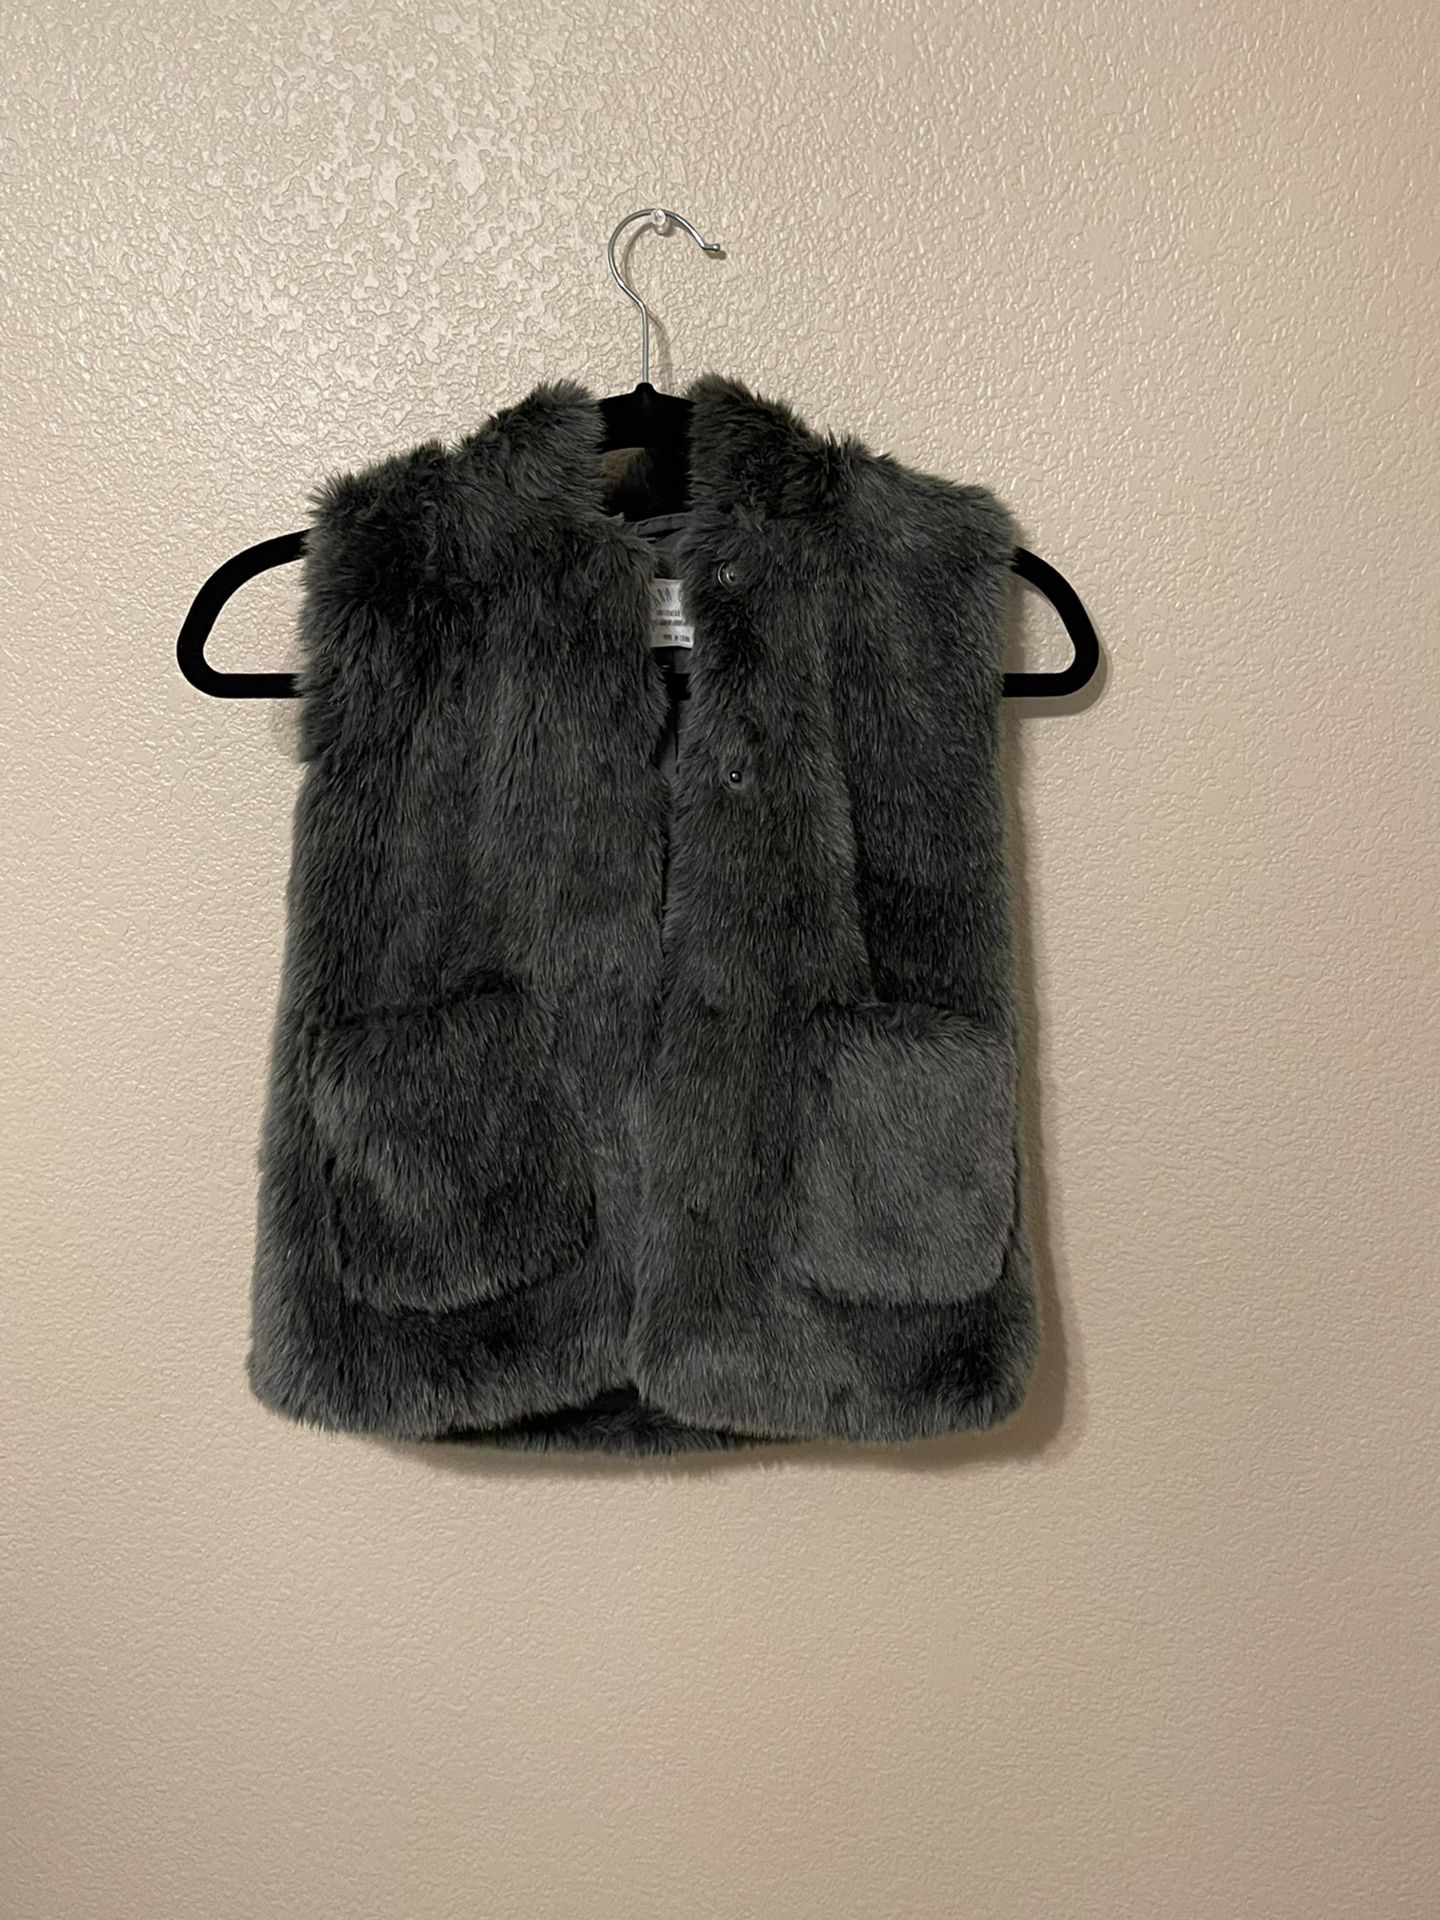 Zara Faux Fur Vest 